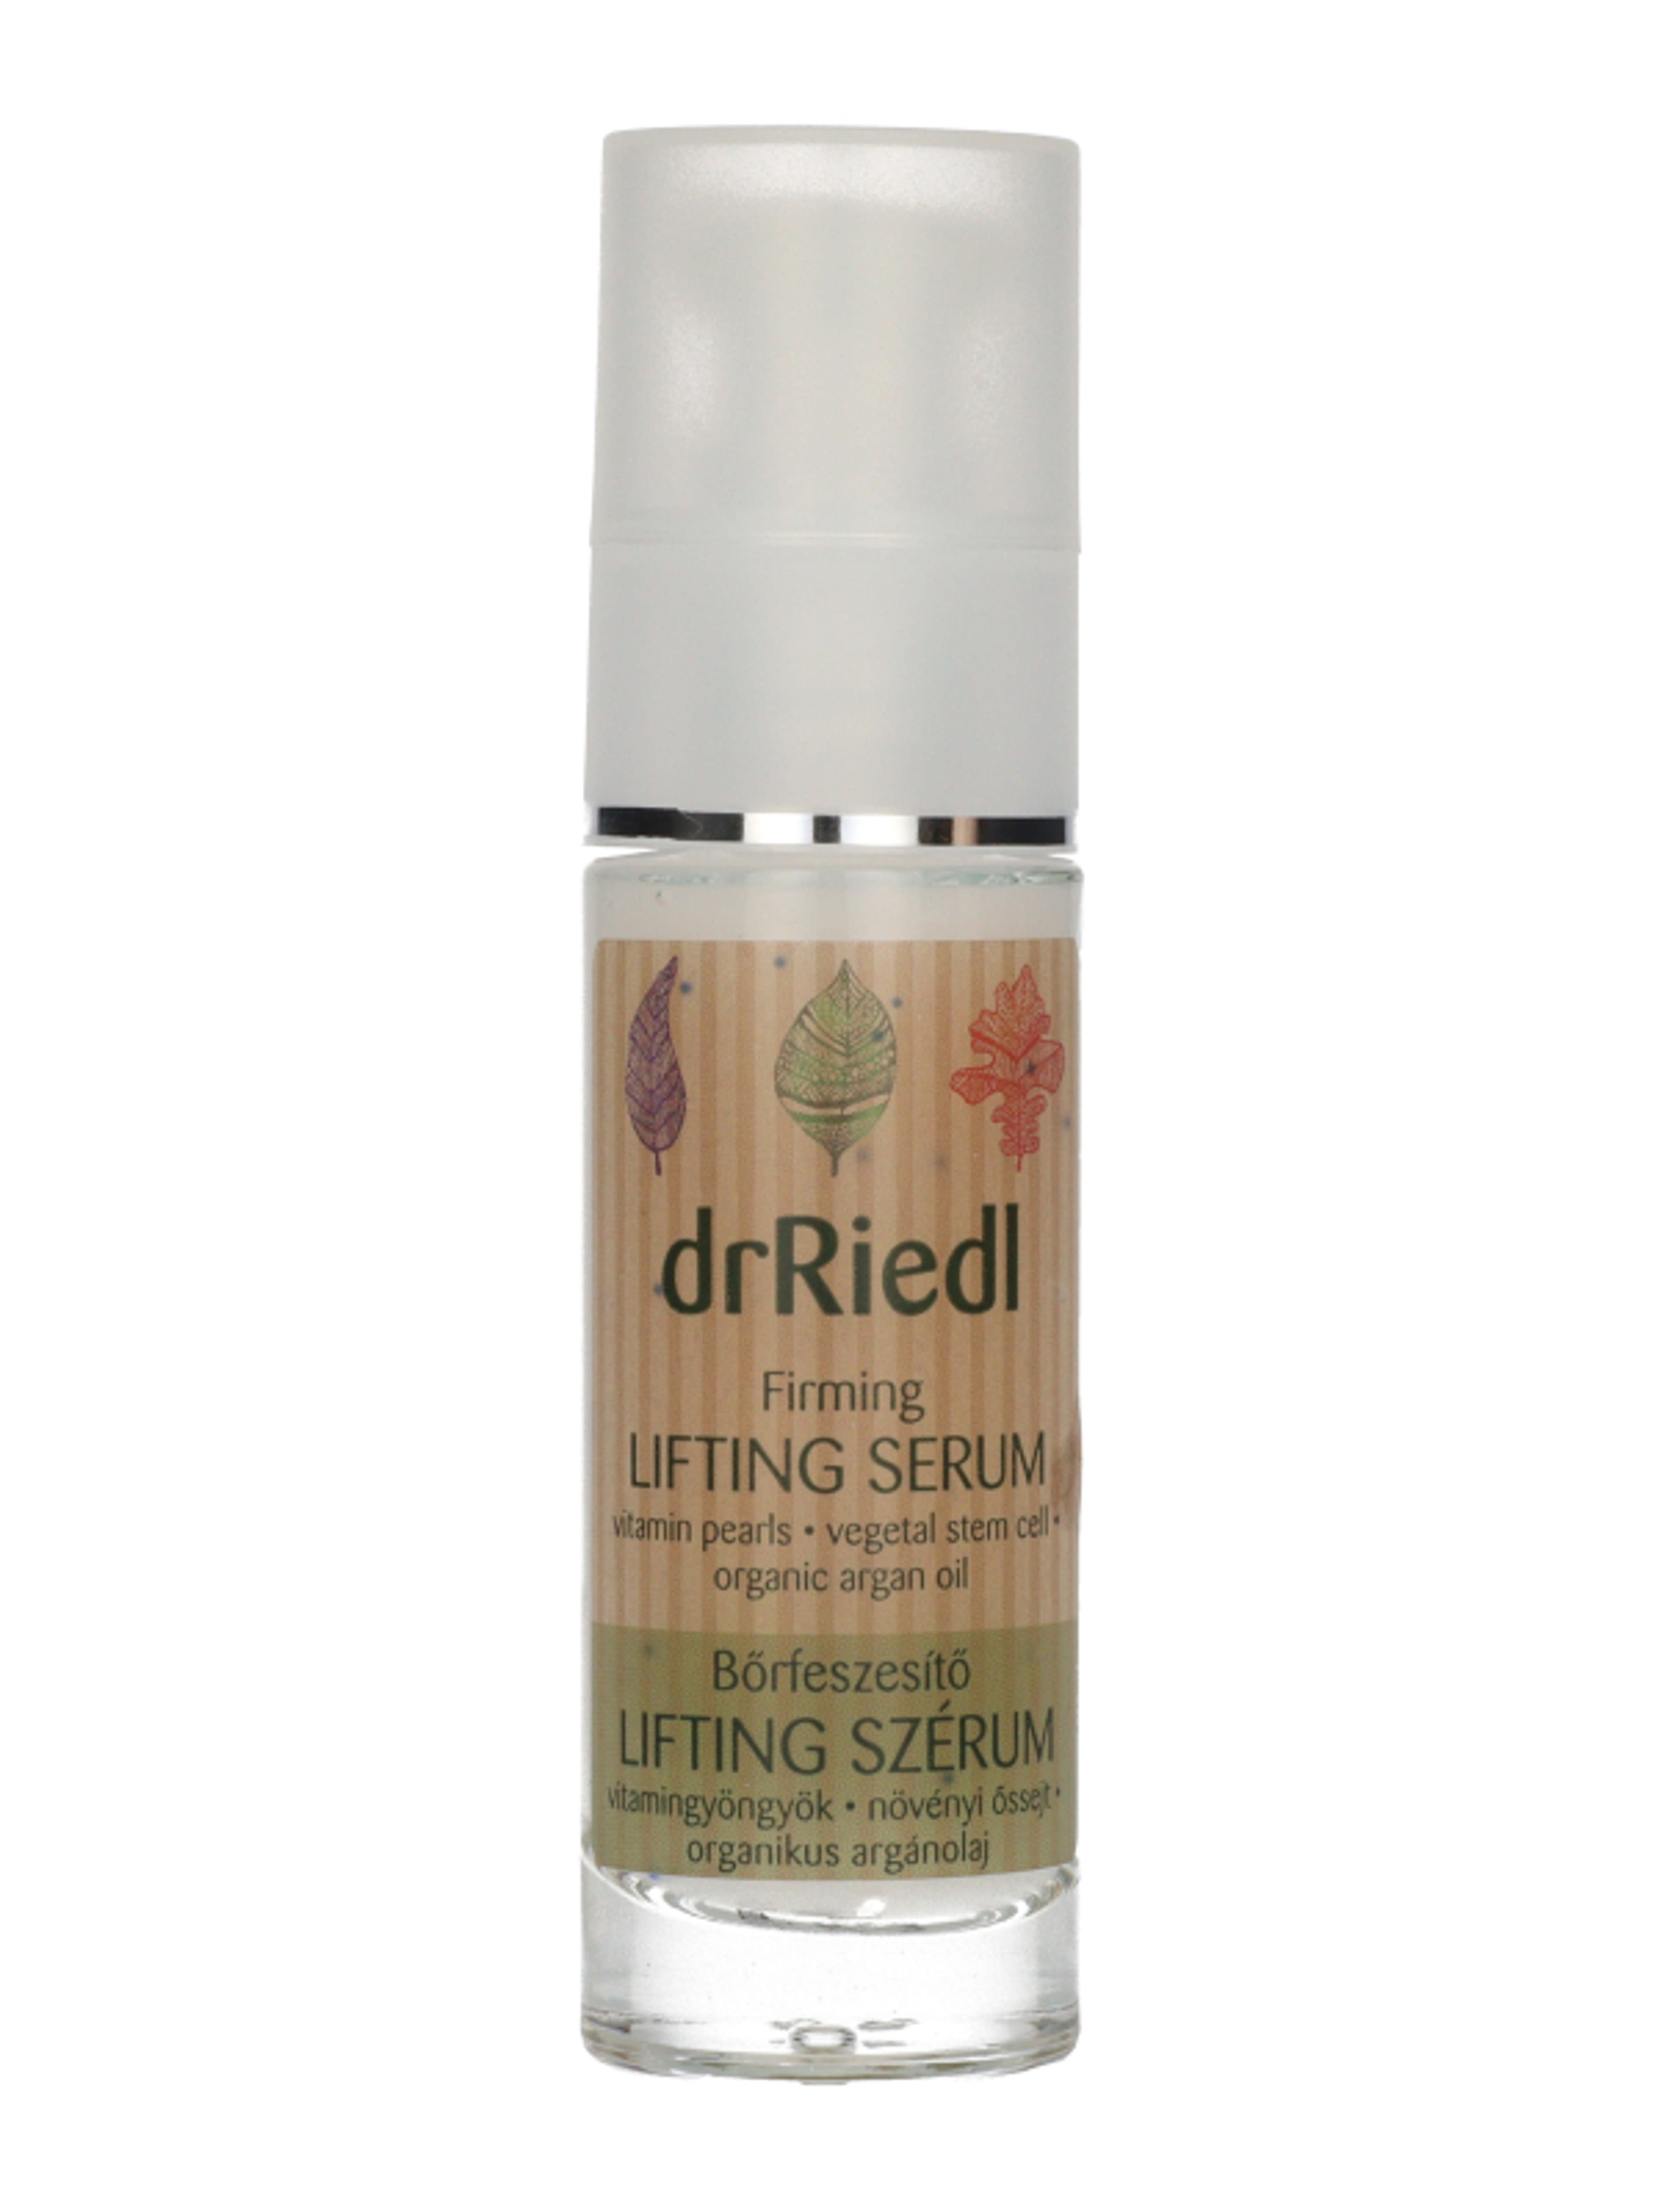 drRiedl Lifting bőrfeszesítő szérum - 30 ml-3